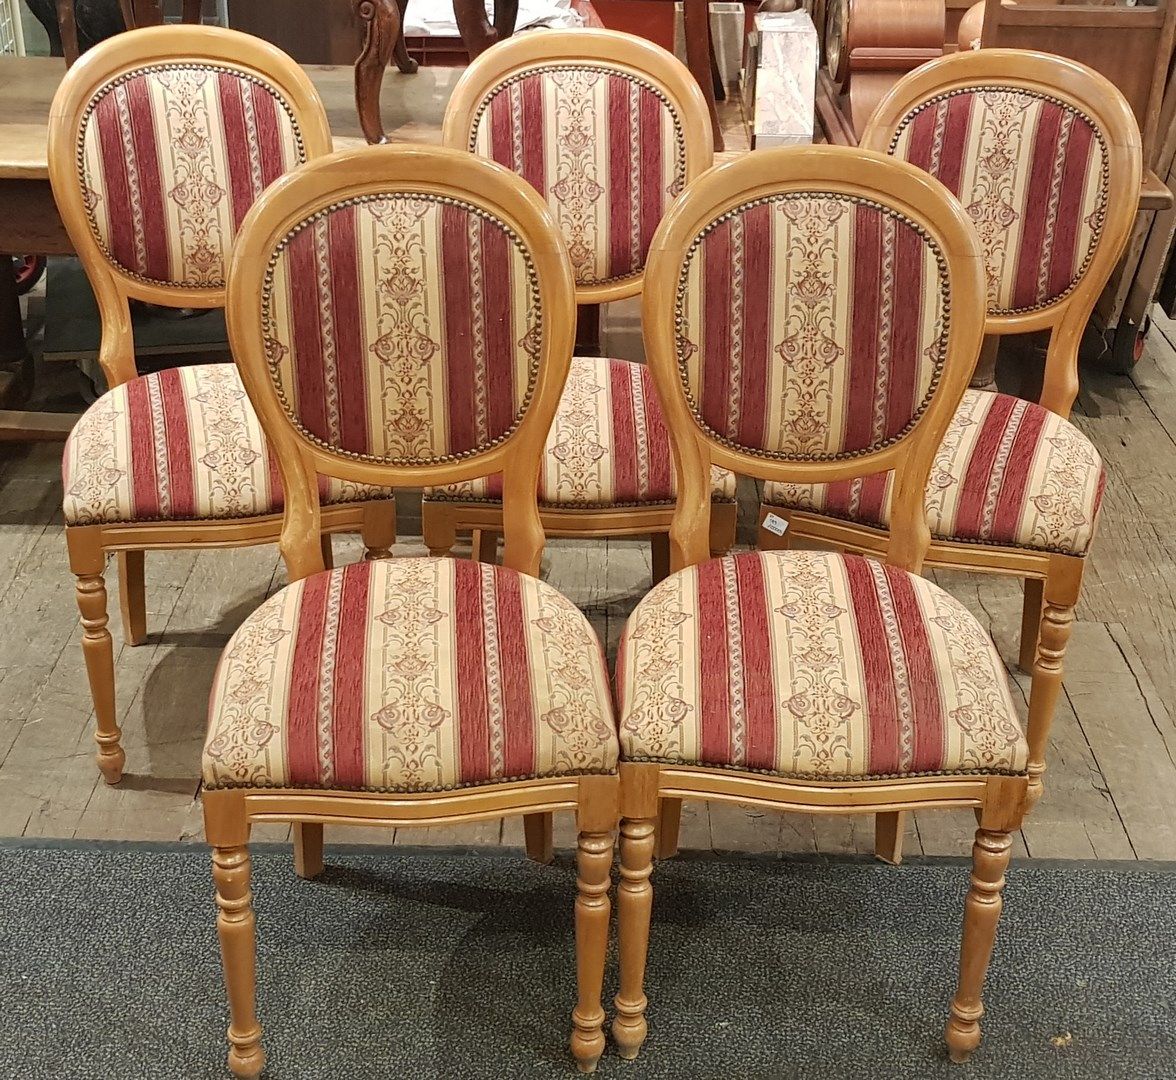 Null 一套五把天然木制椅子，椅背和椅座上装饰有卷轴和交错的织物。

搁置在四个转动的木腿上。

H.100 cm - W. 45 cm - D. 47 cm